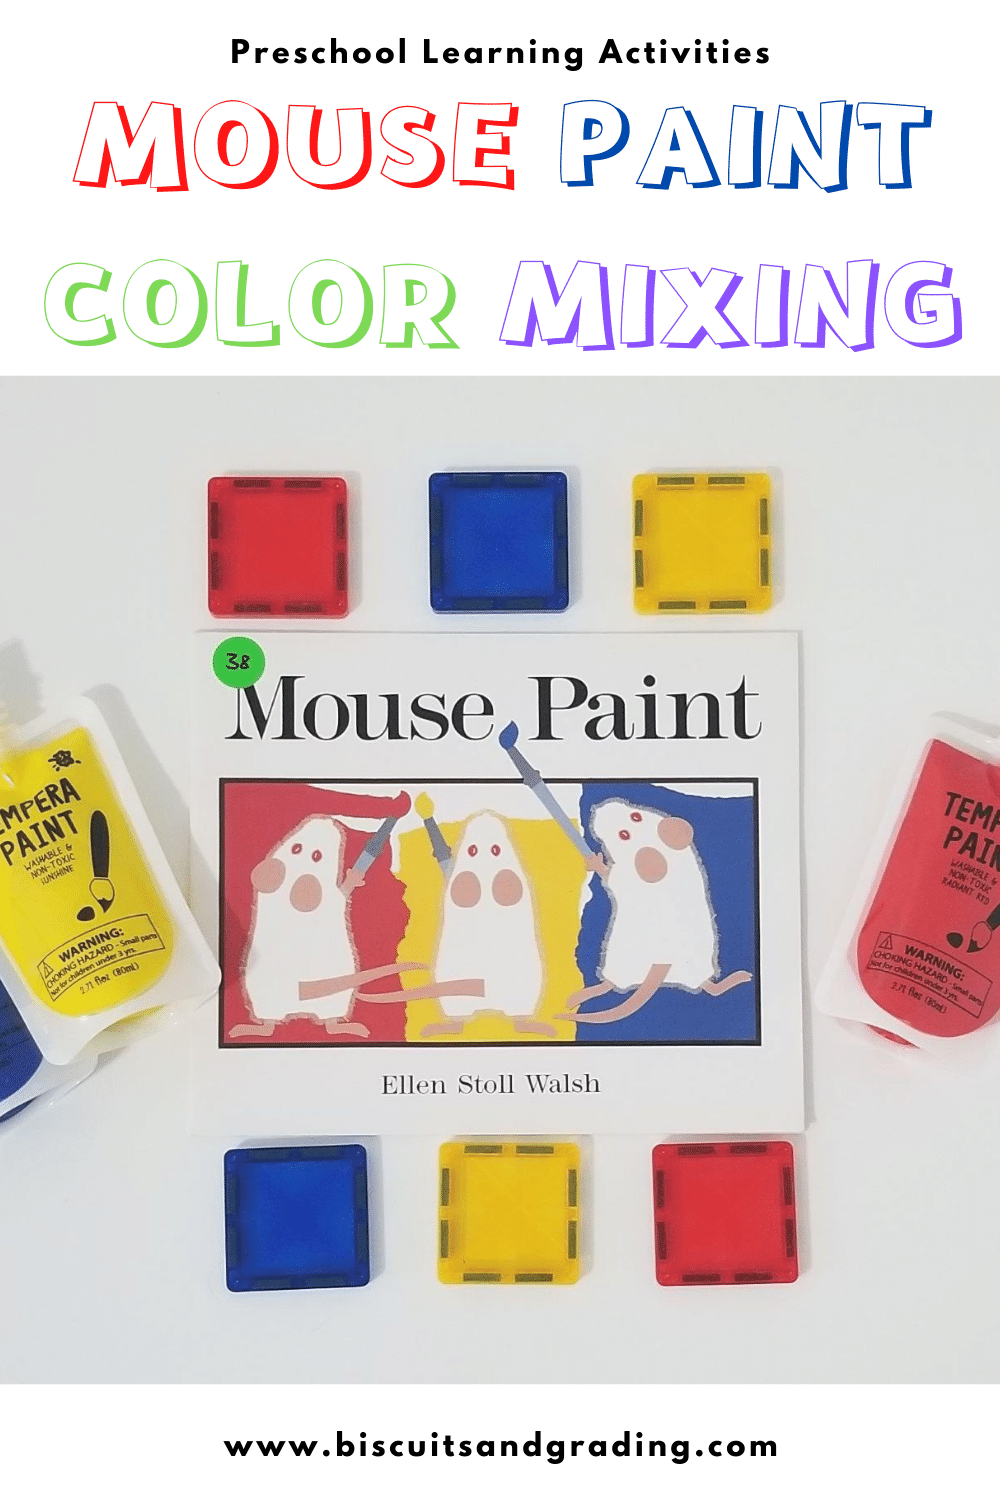 Mouse Paint Color Mixing